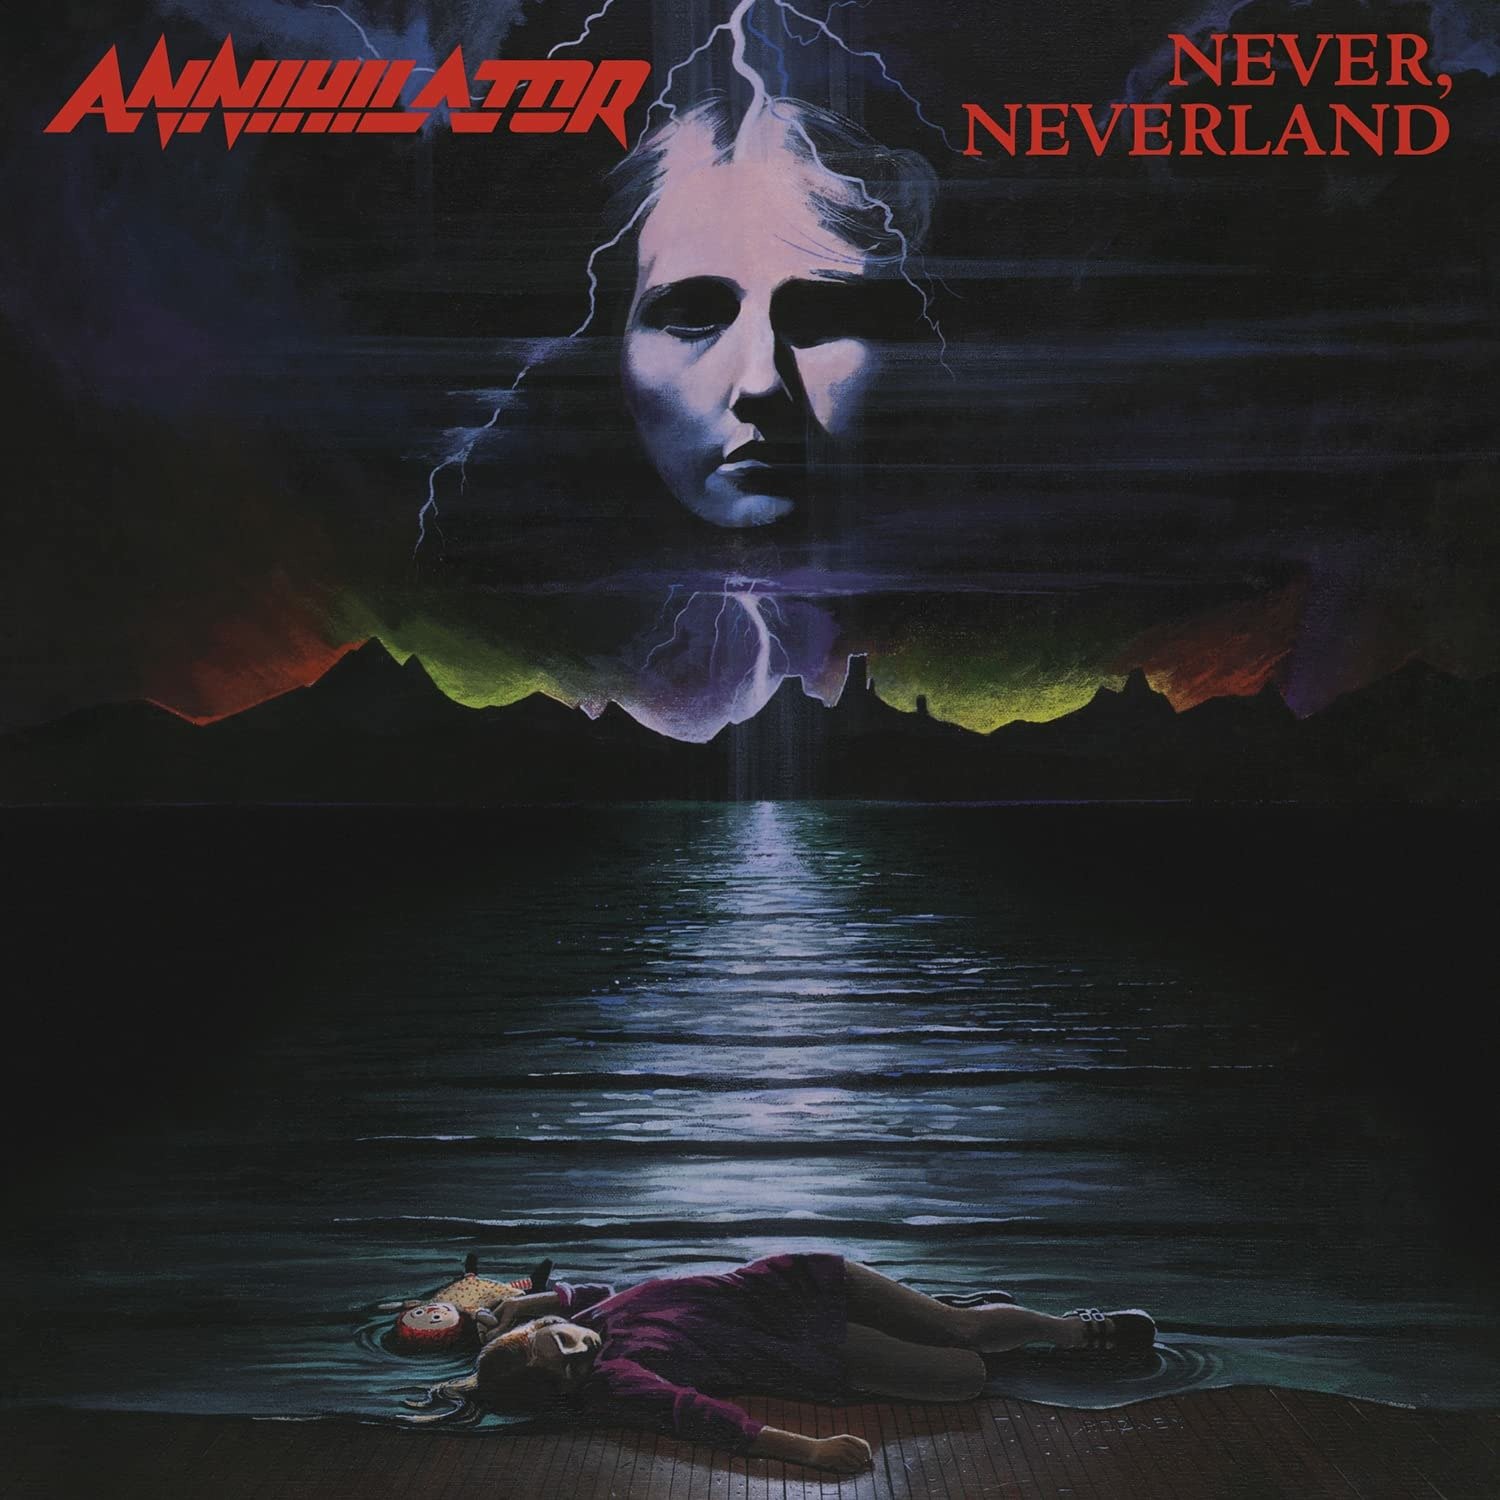 Металл Music On Vinyl Annihilator - Never, Neverland (Black Vinyl LP) marc bolan at the bbc electric sevens 2 4x7 vinyl single